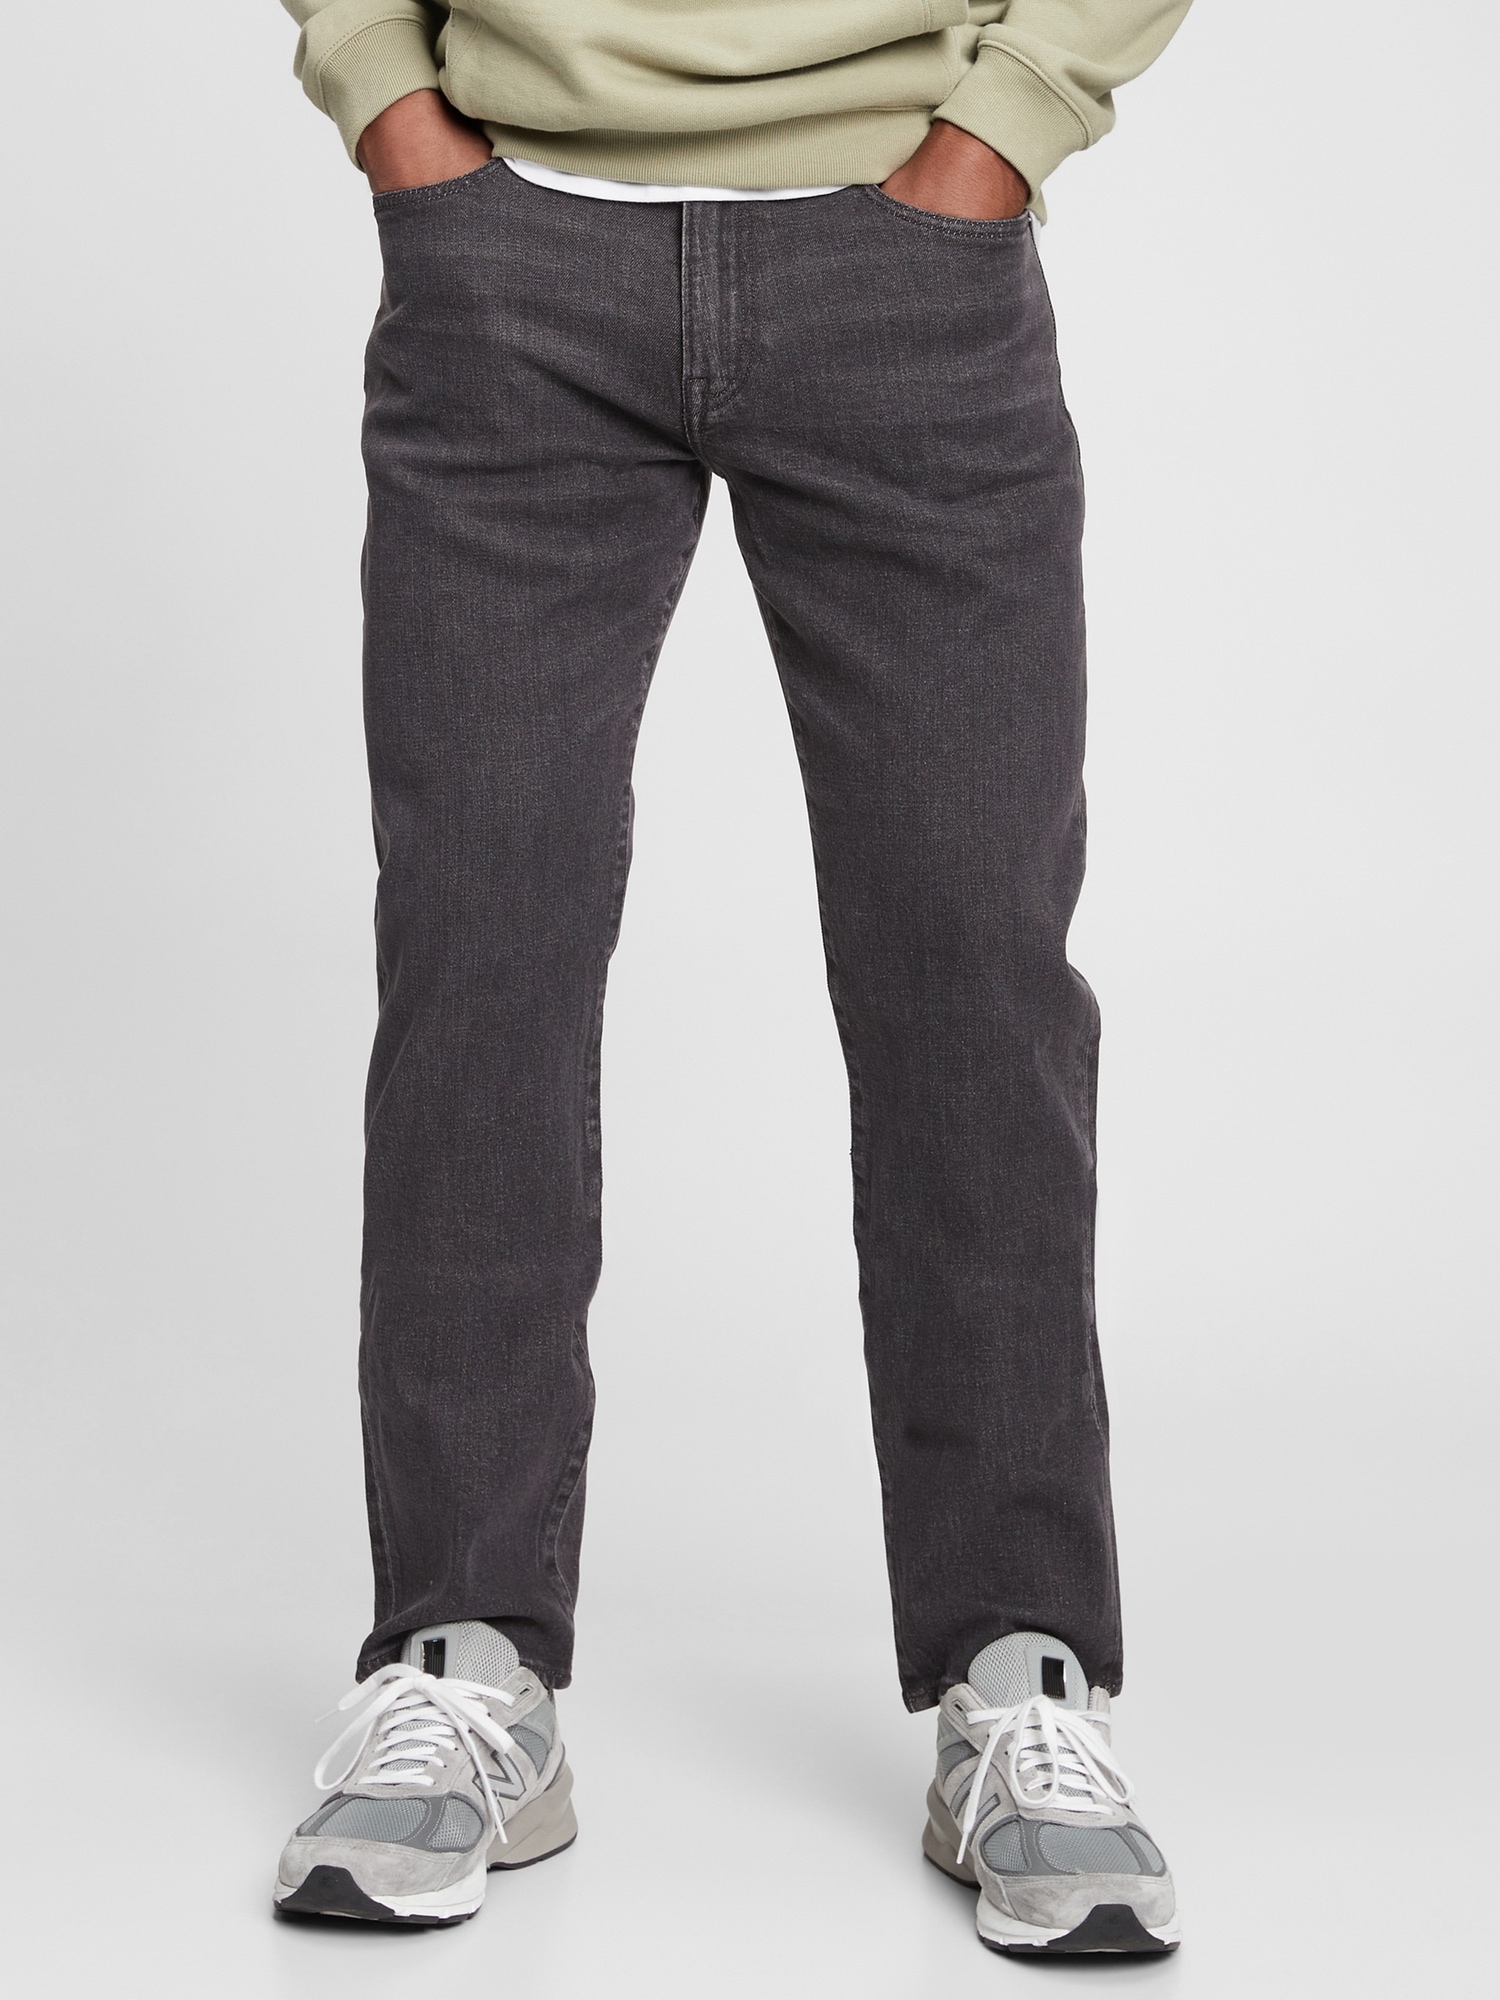 Soft Flex Straight Jeans with Washwell™ | Gap